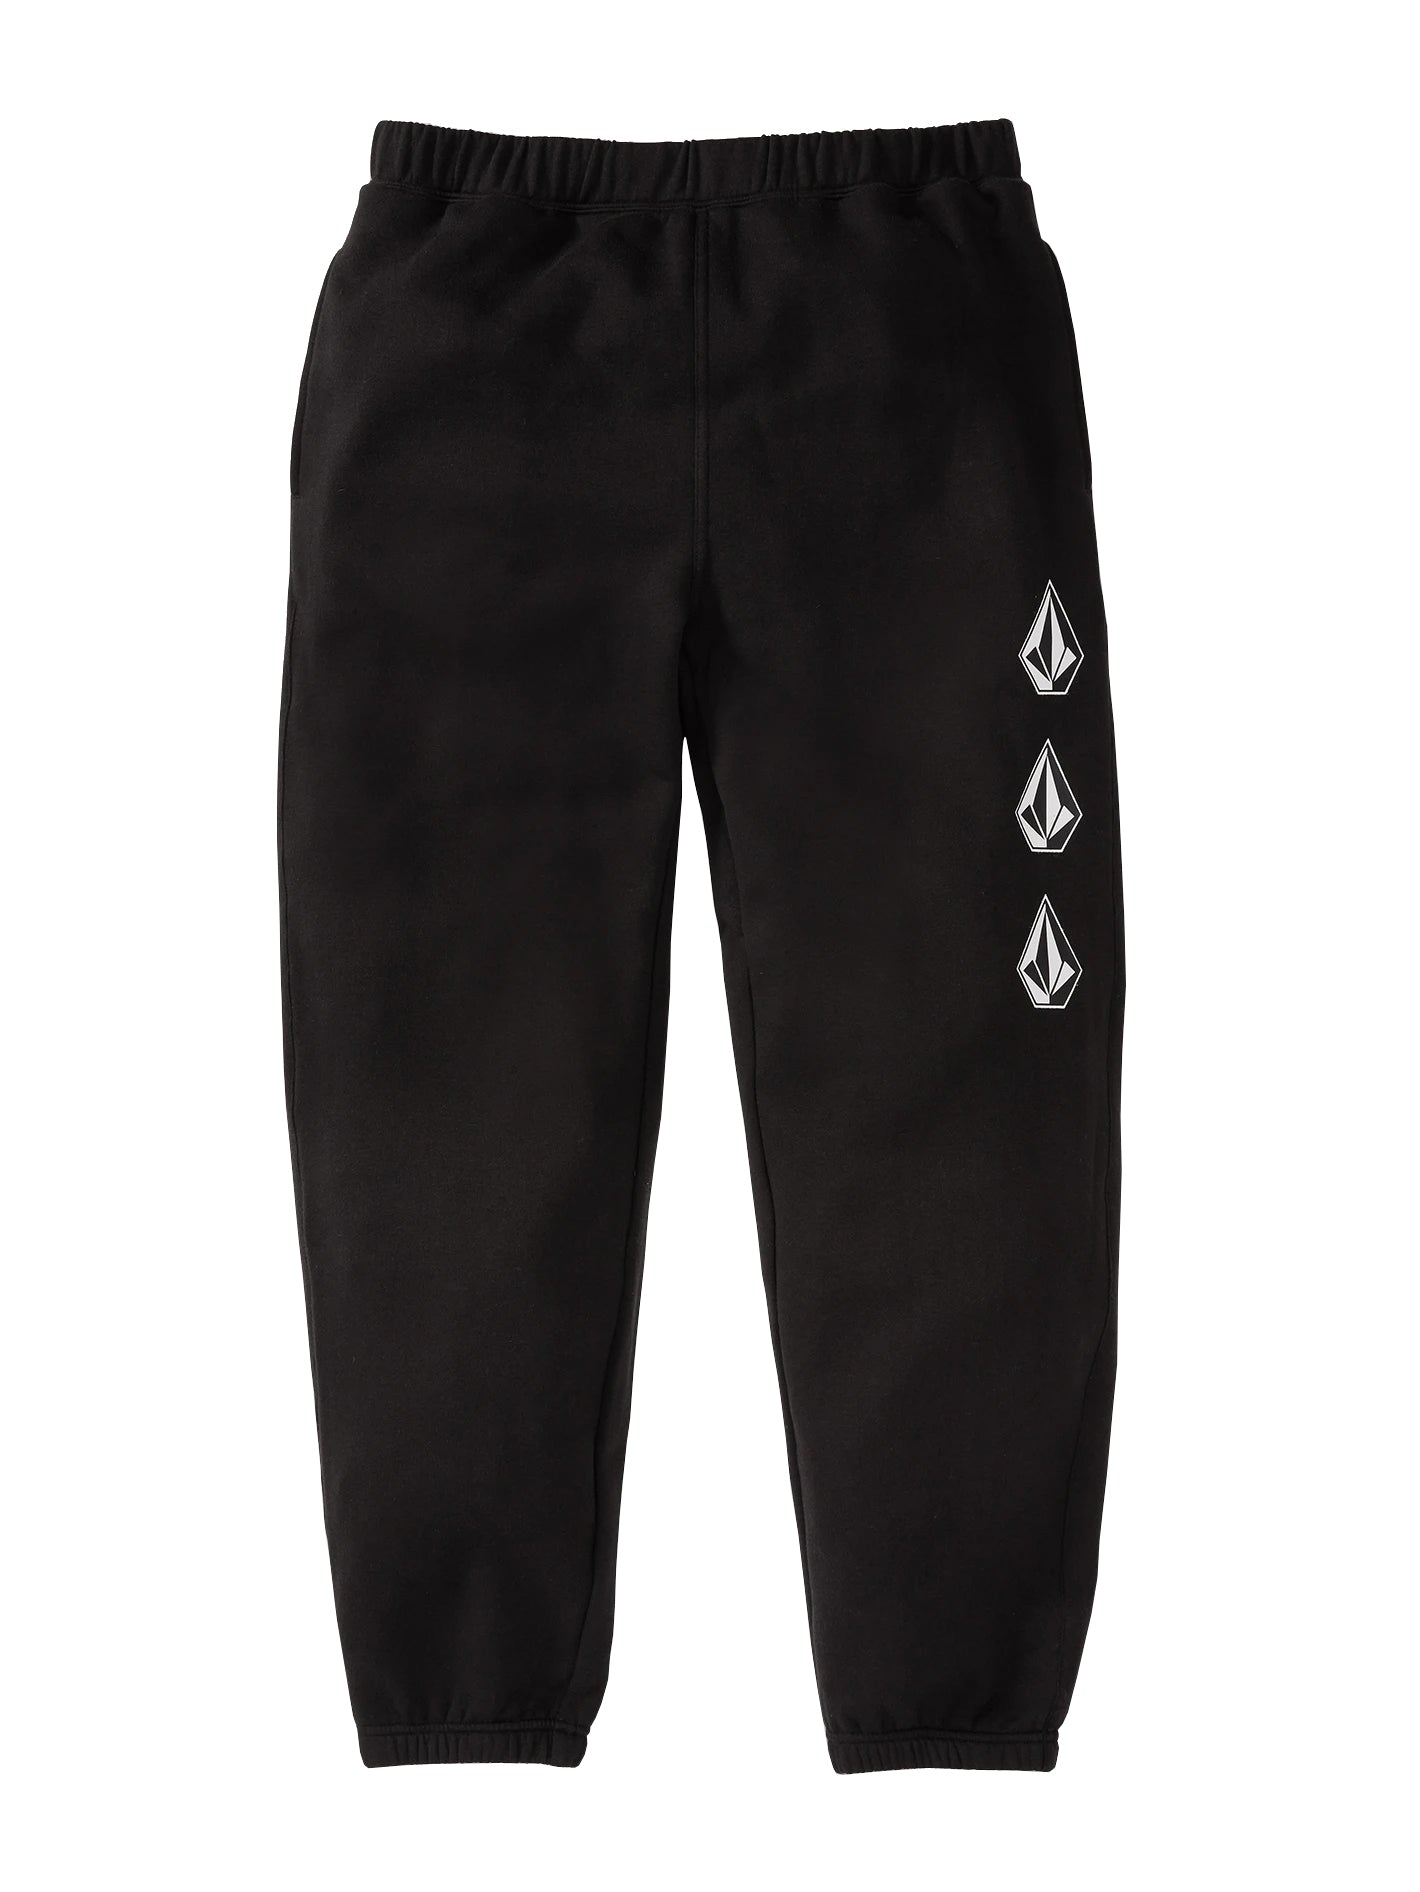 Volcom Iconic Stone Fleece Pants BLK-Black XL